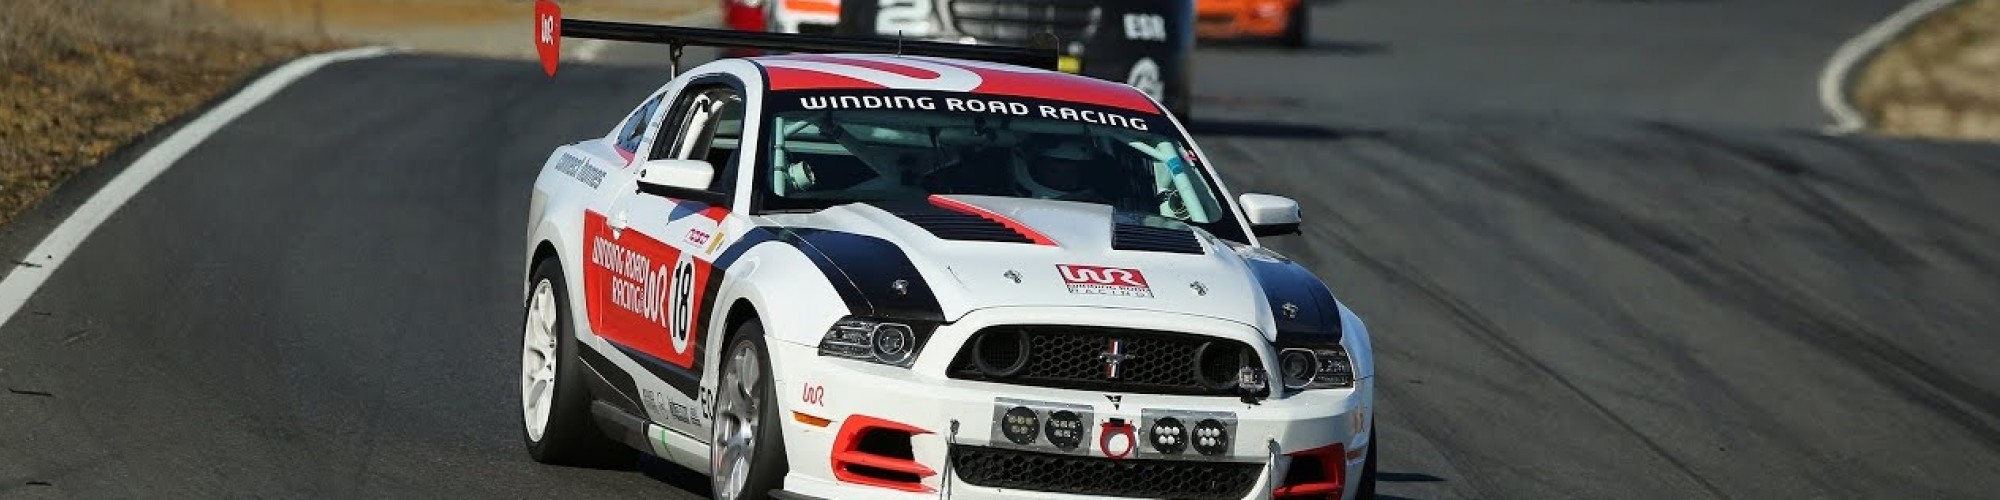 Winding Road Racing